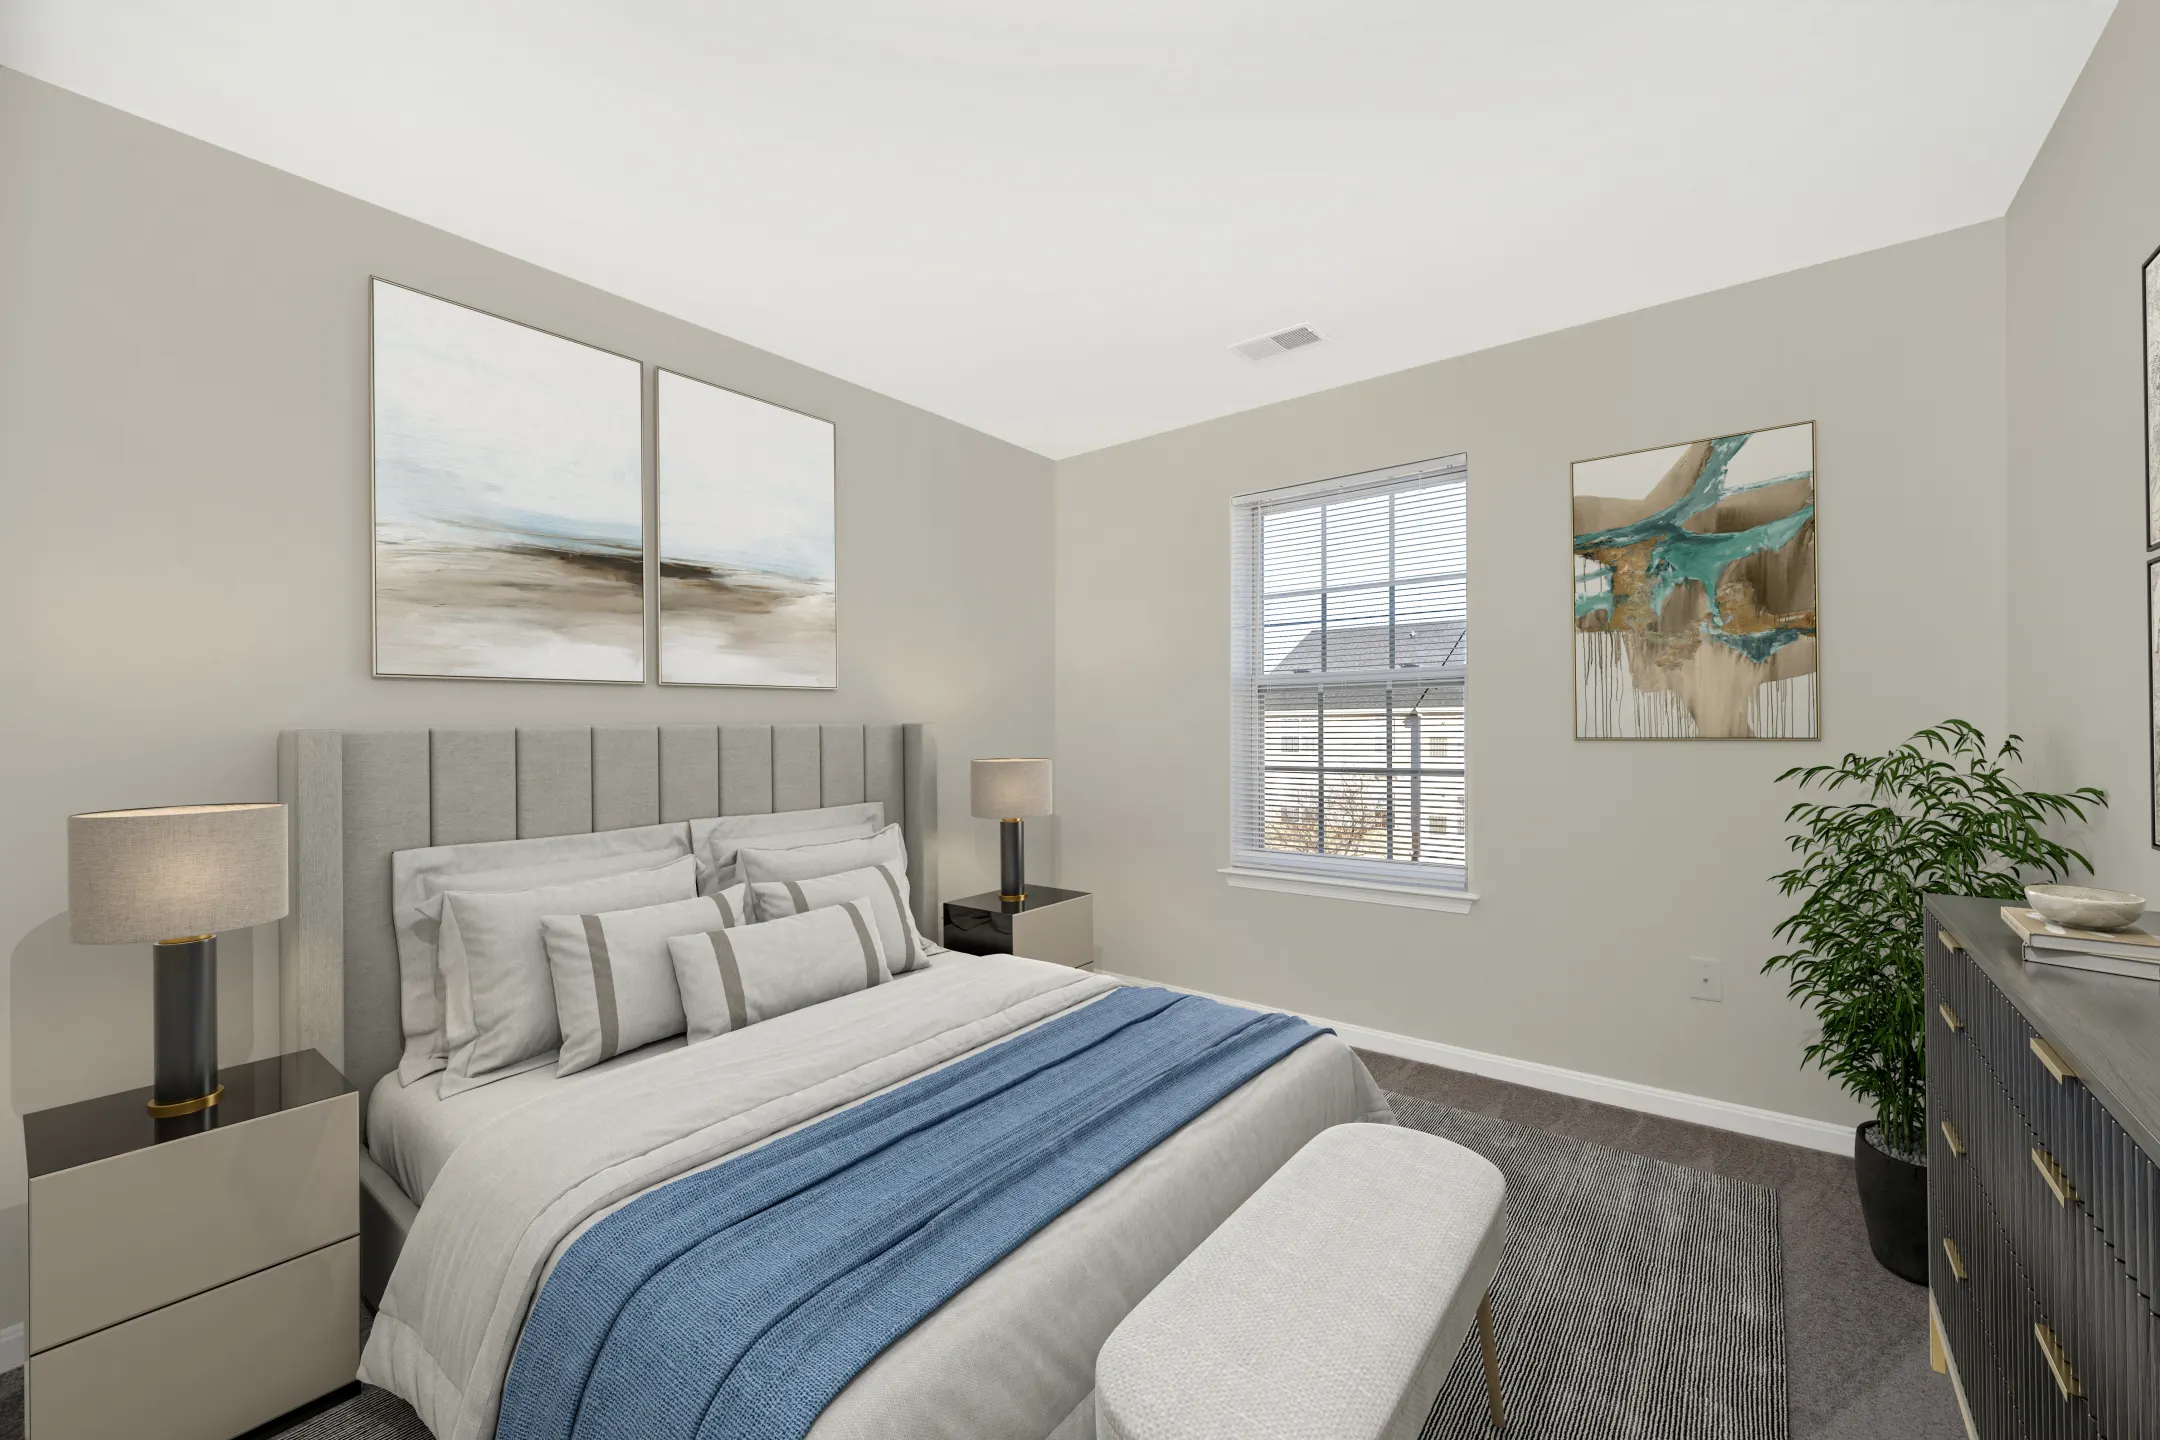 Bedroom - Fairway Vista Apartments - Frederick, MD